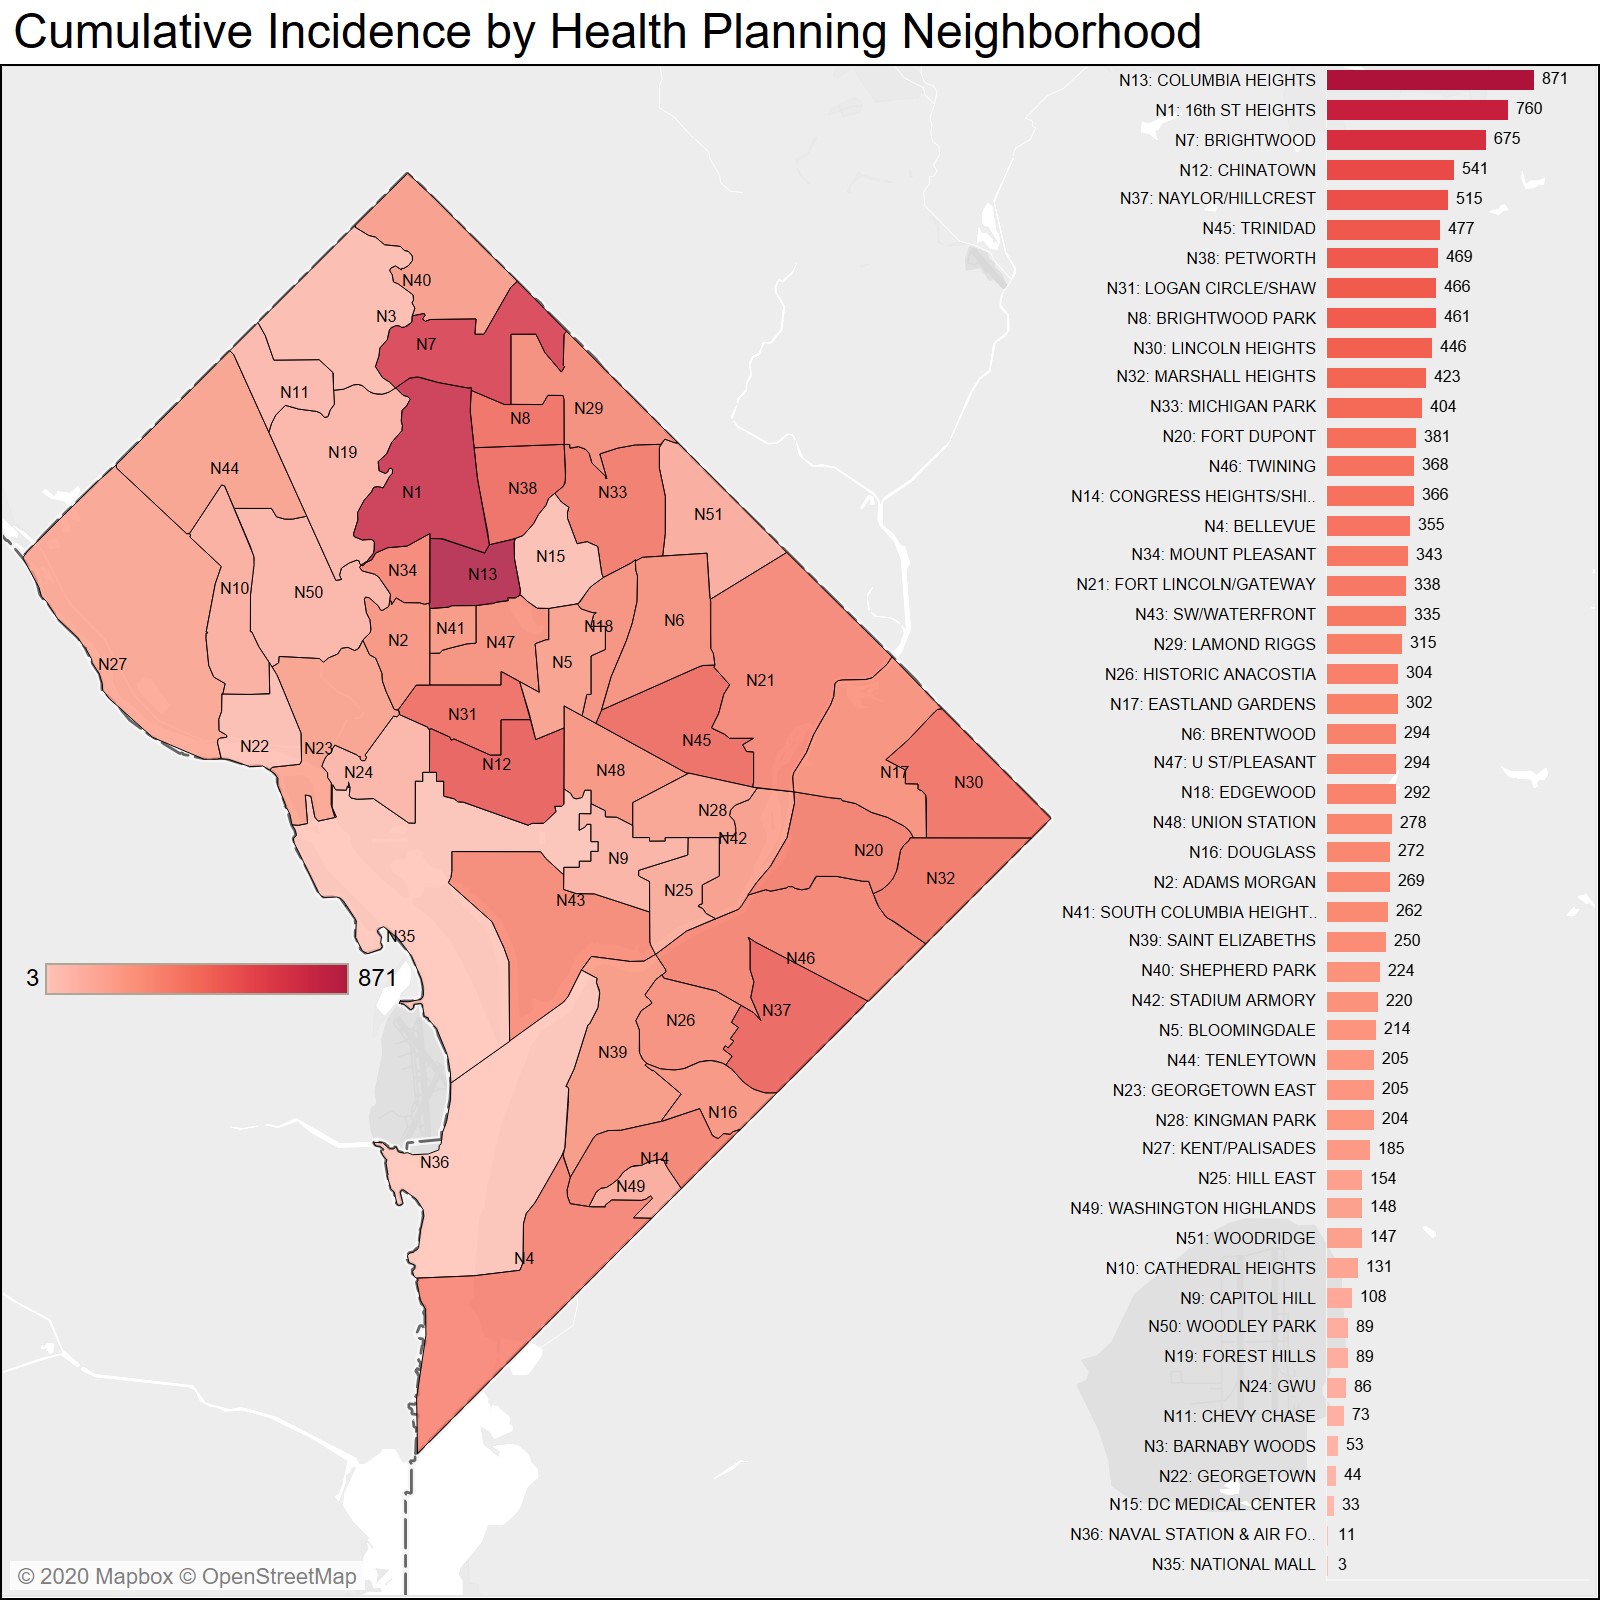 Cumulative incidence by neighborhood